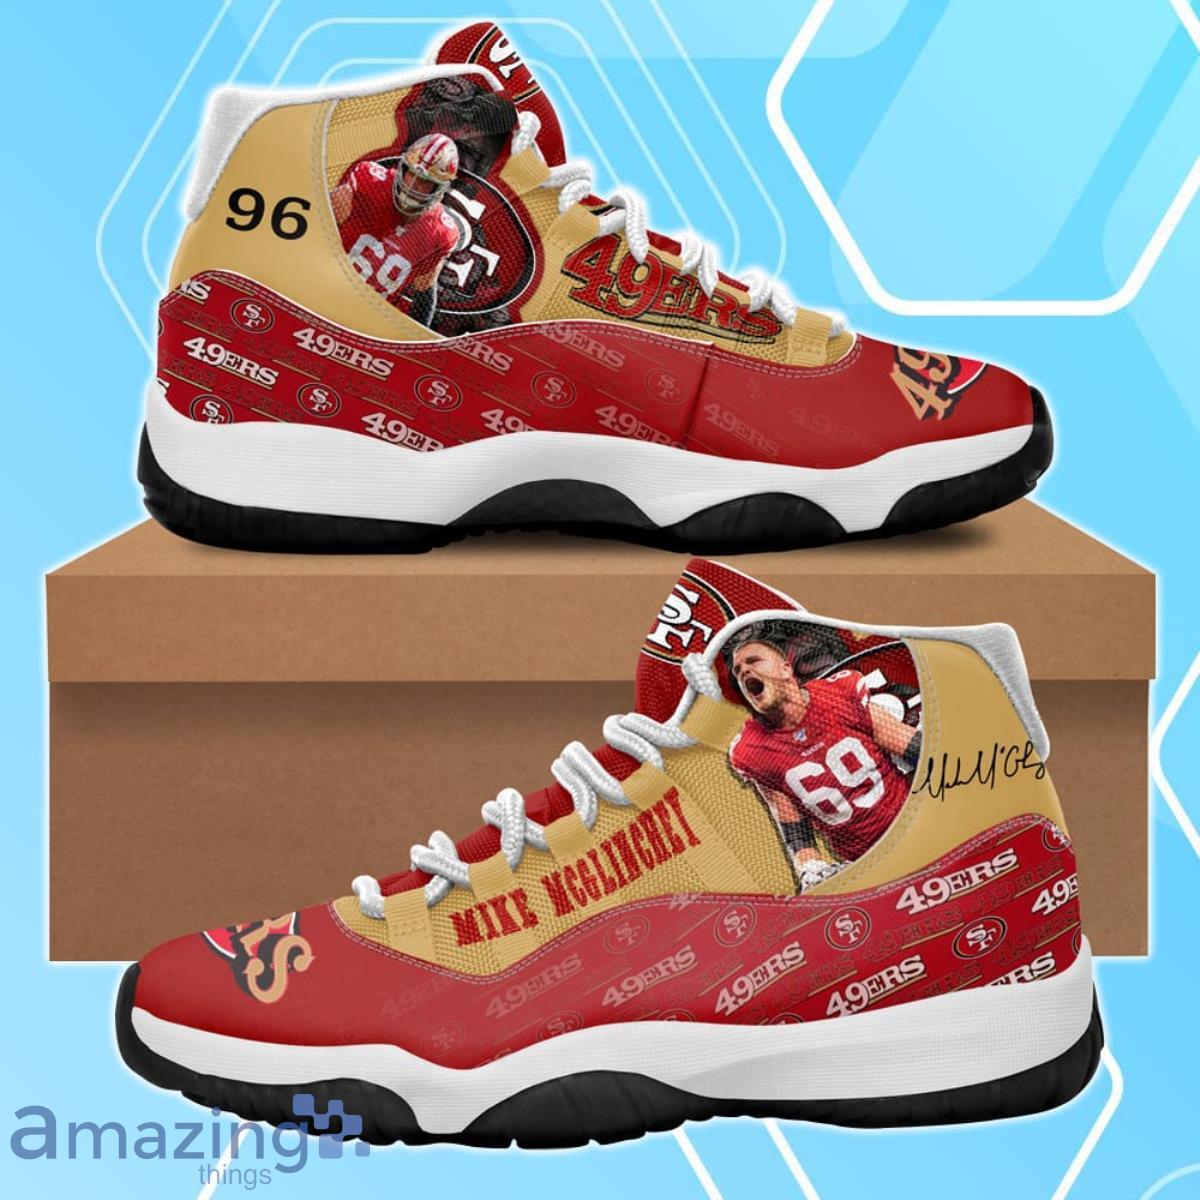 San Francisco 49ers Mike McGlinchey Air Jordan 11 Shoes For Men Women Product Photo 1